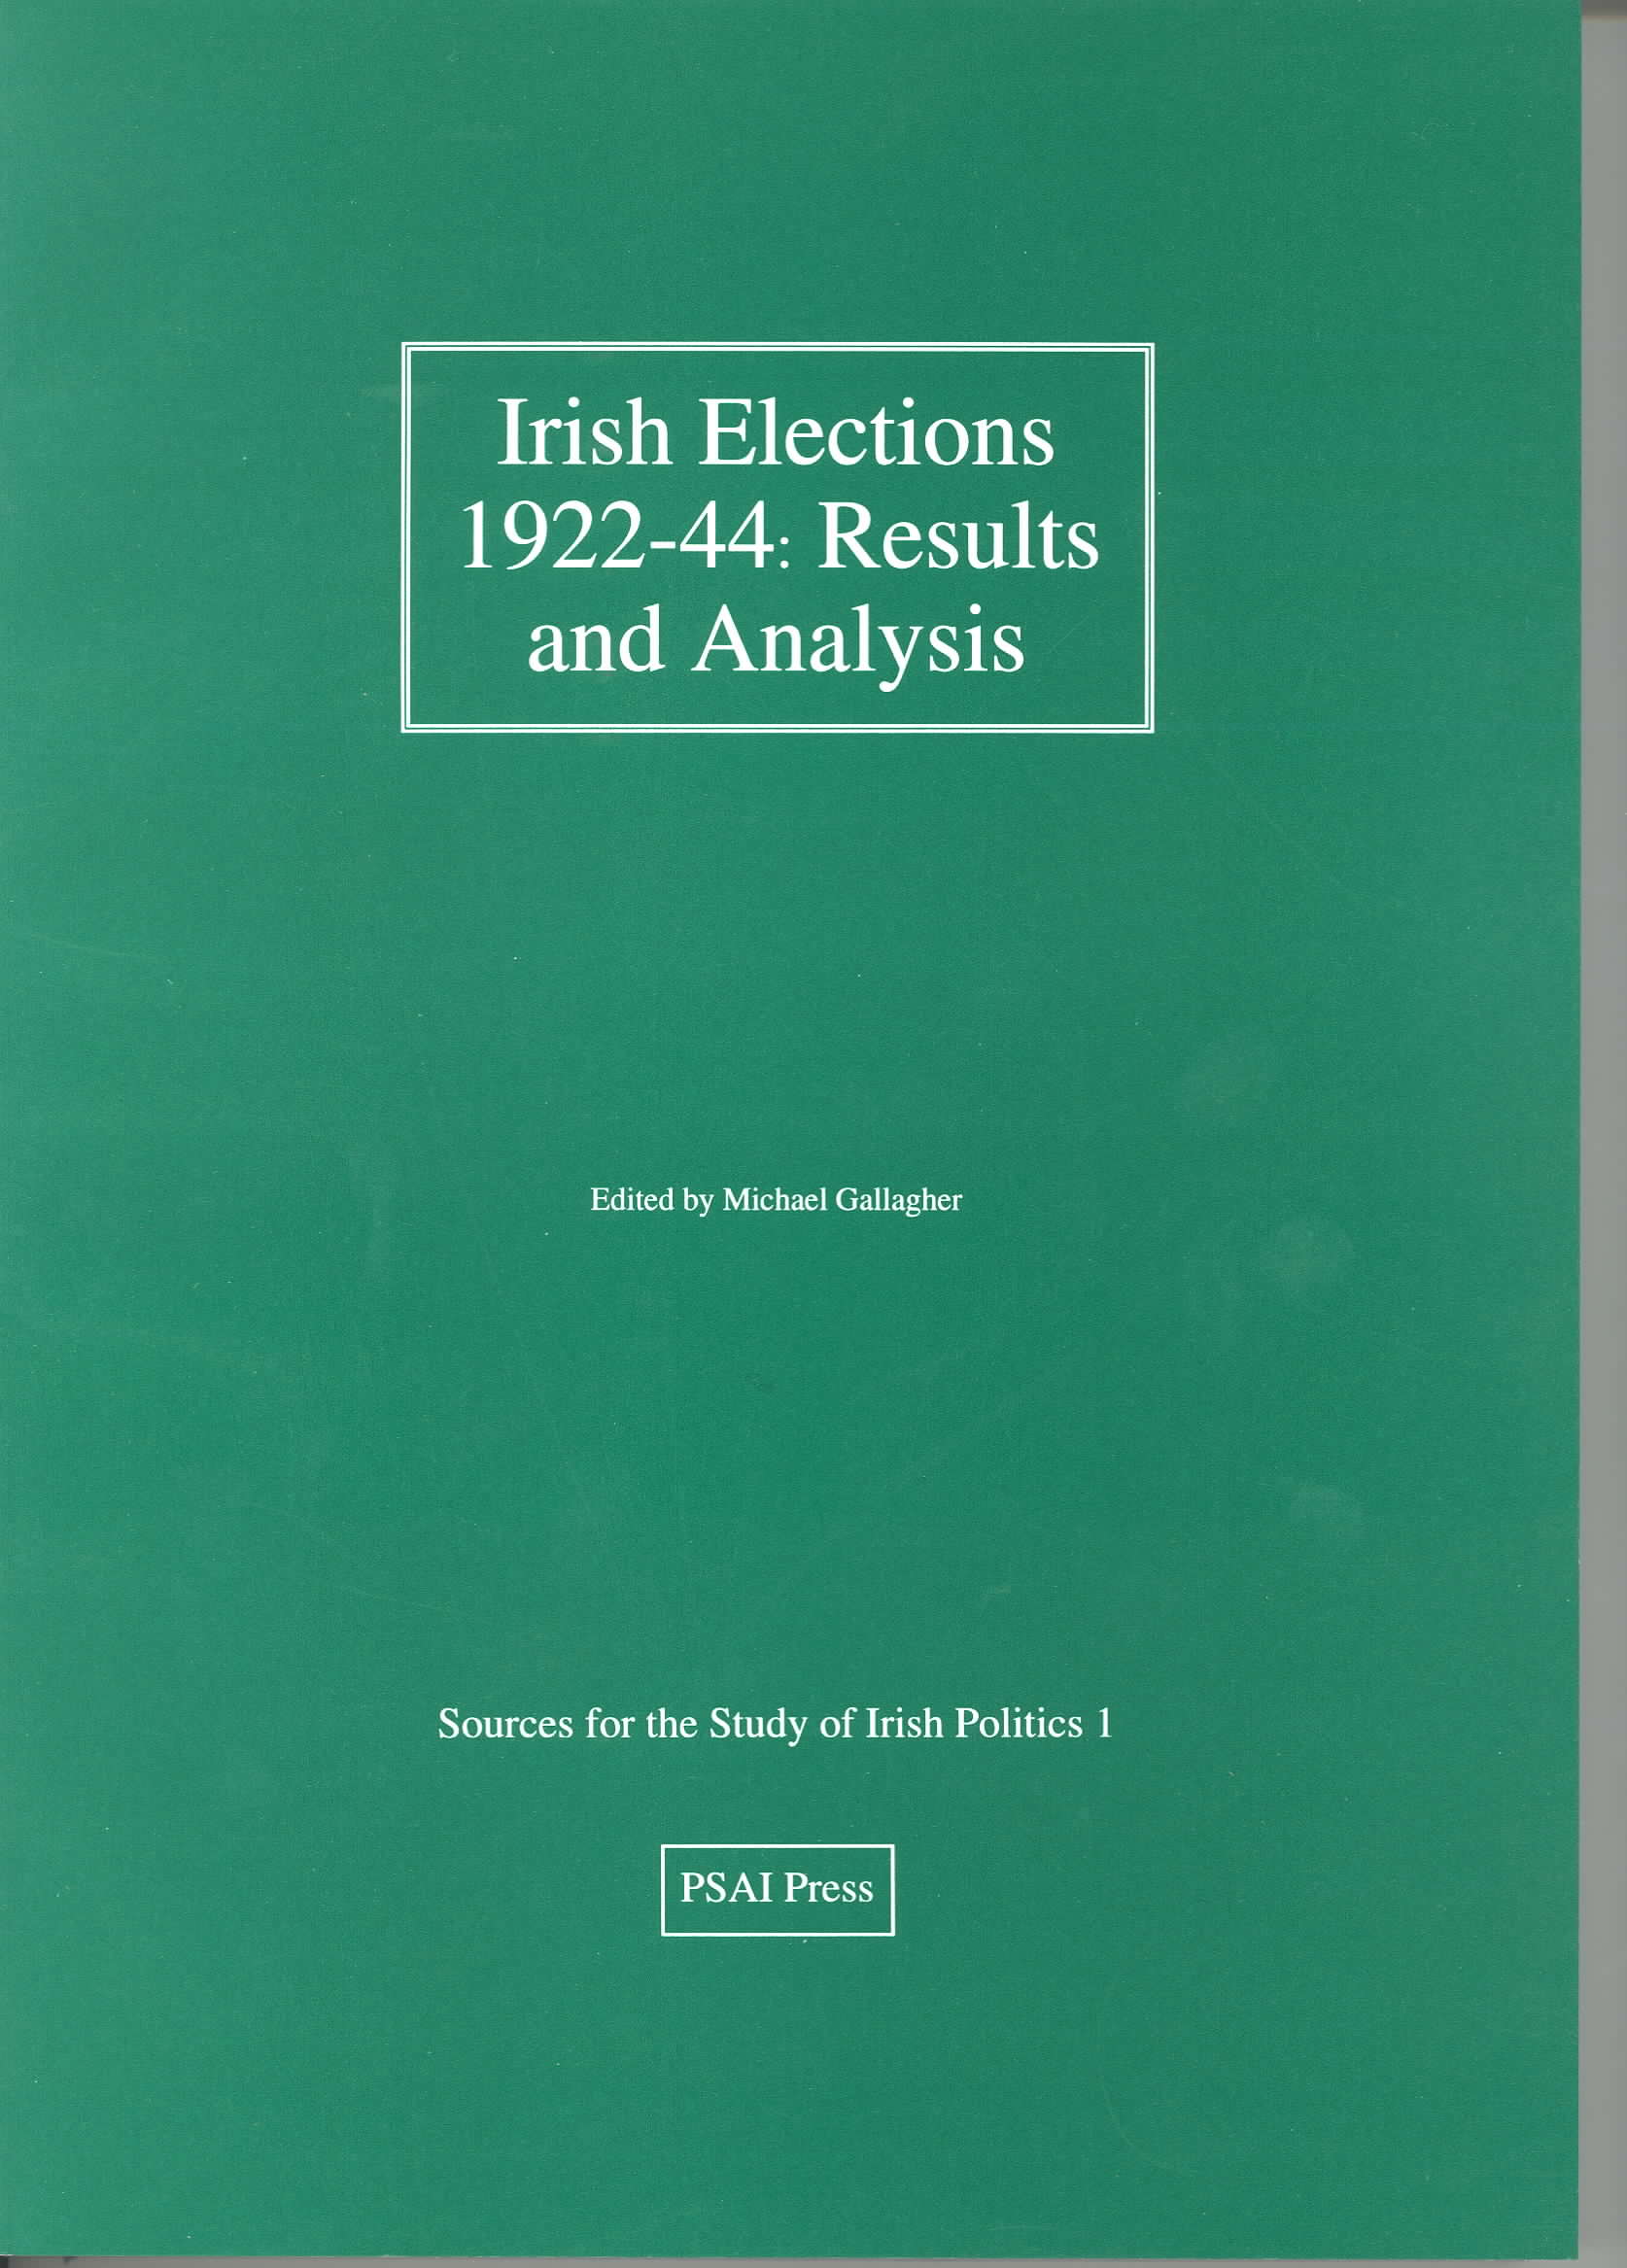 Irish Elections 1922-44 cover